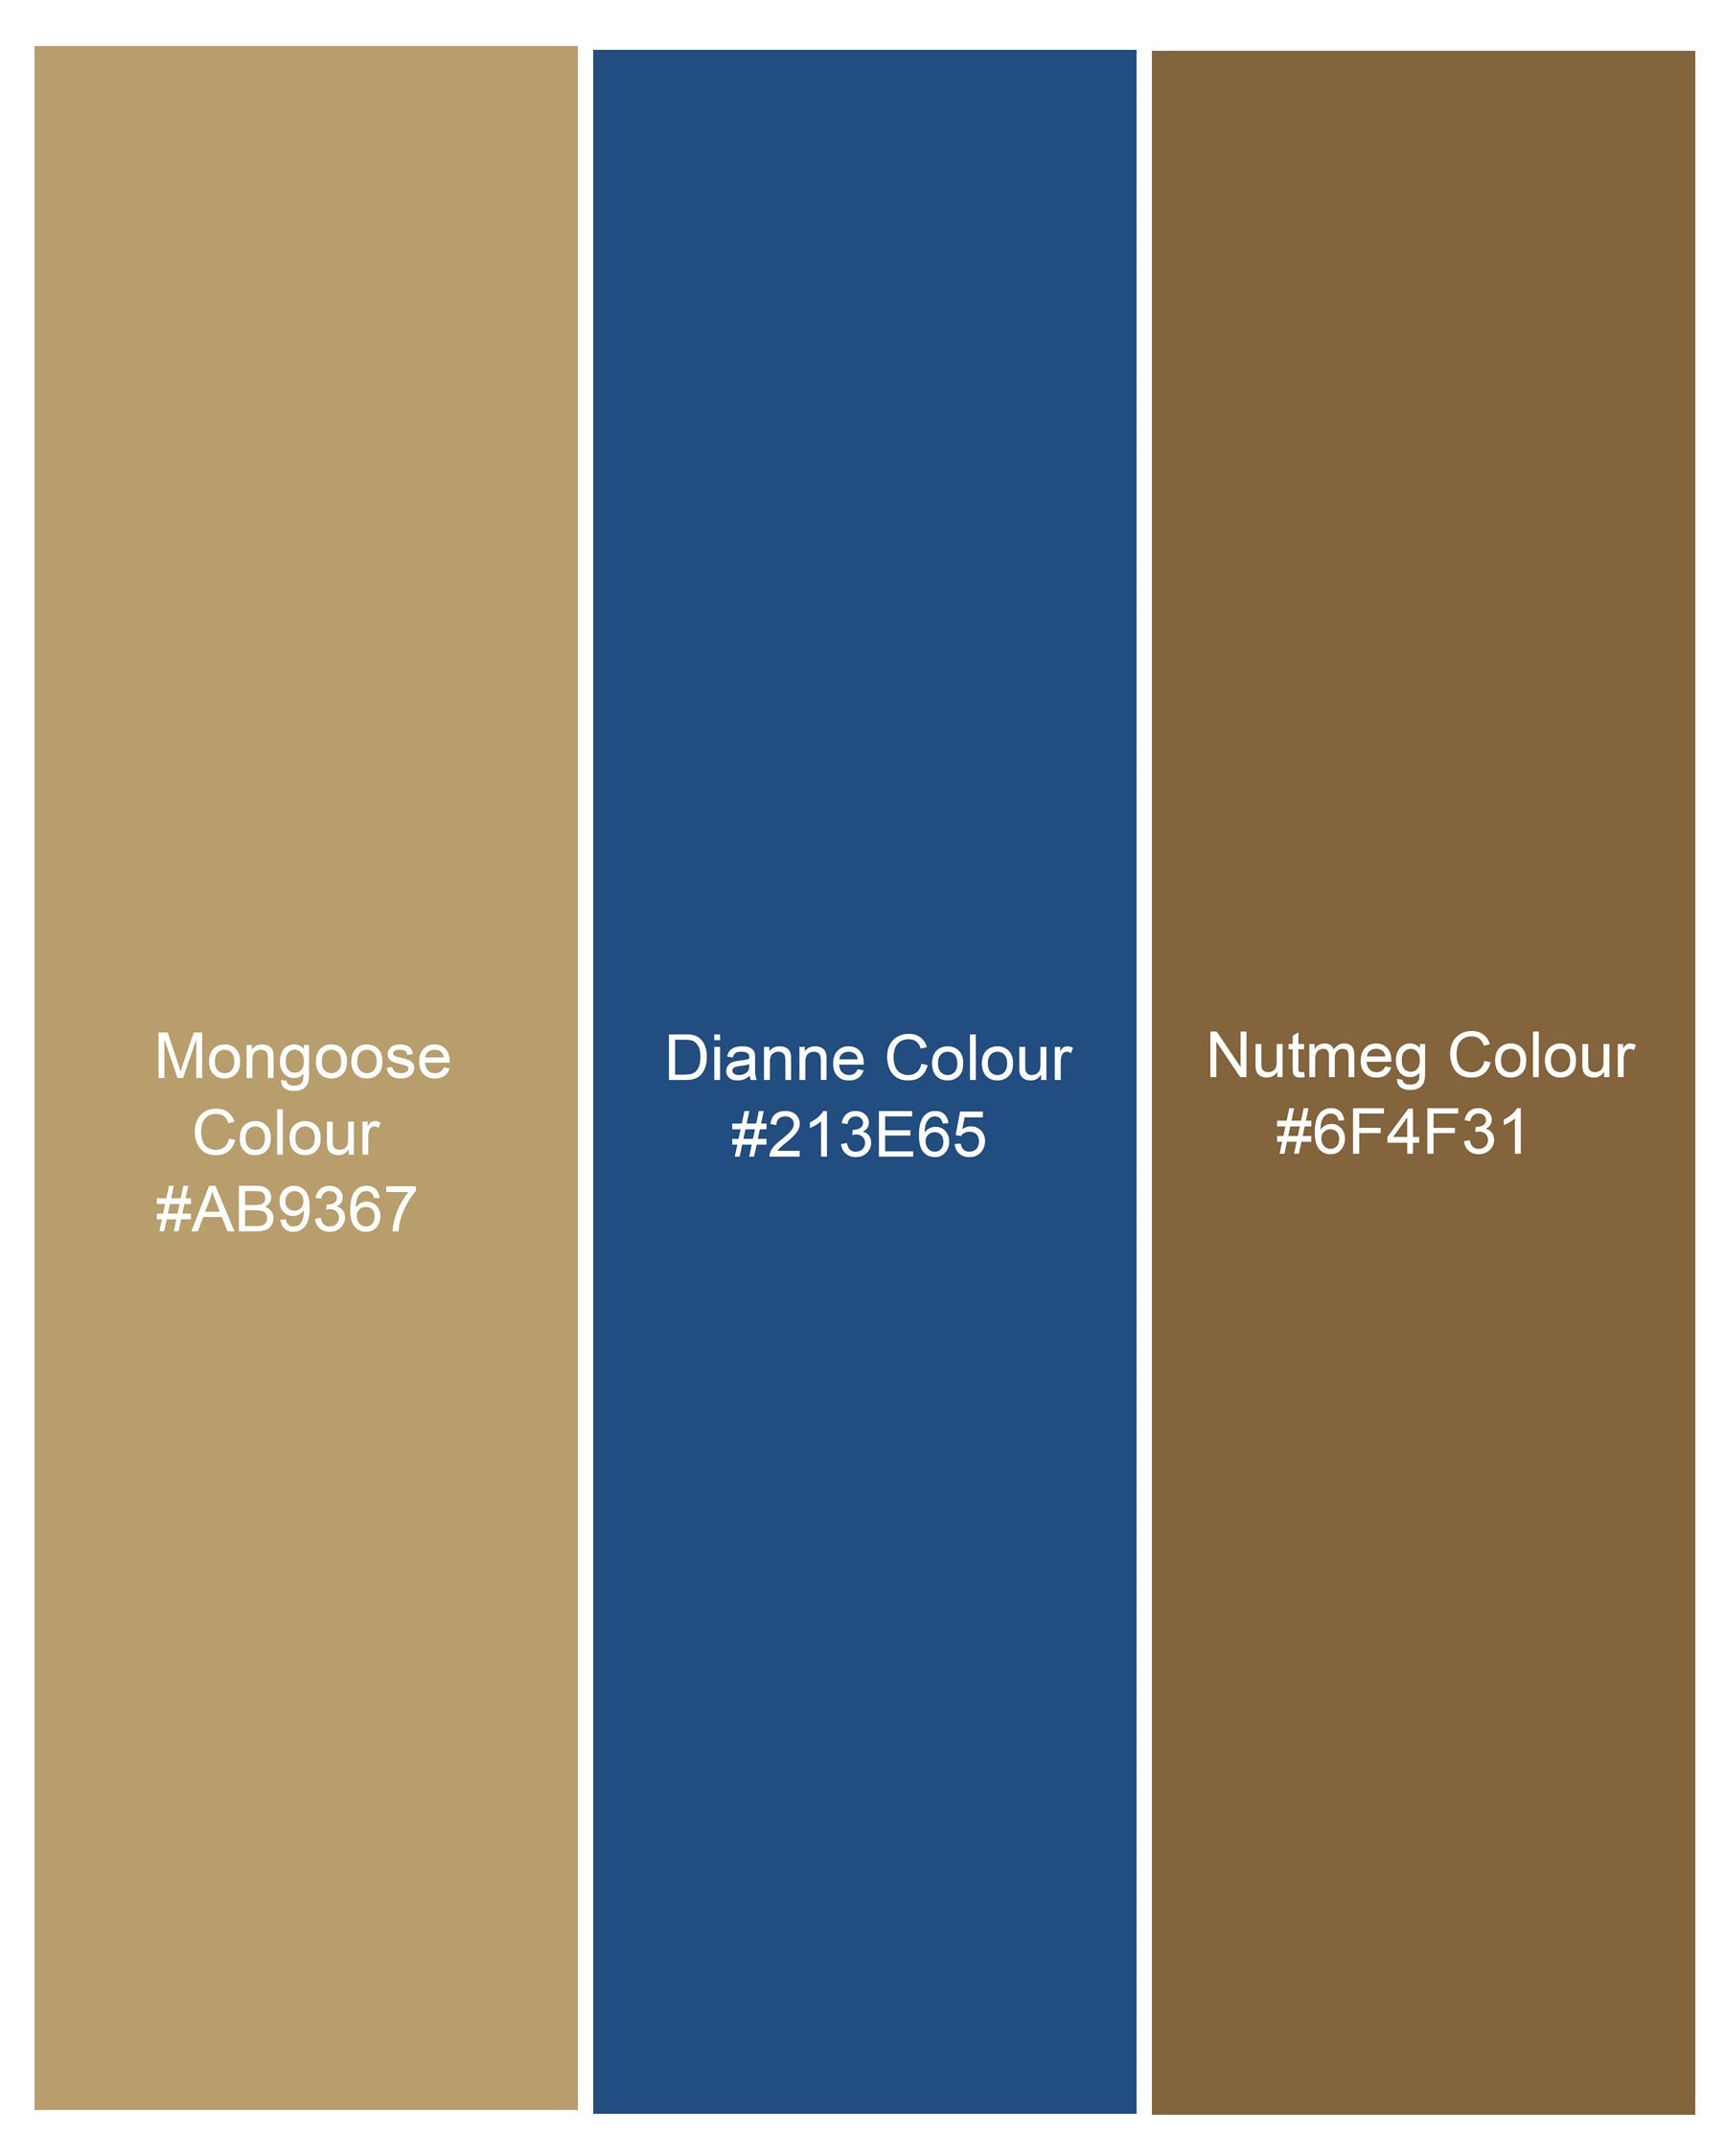 Mongoose Brown with Dianne Blue Windowpane Cross Placket Bandhgala Blazer